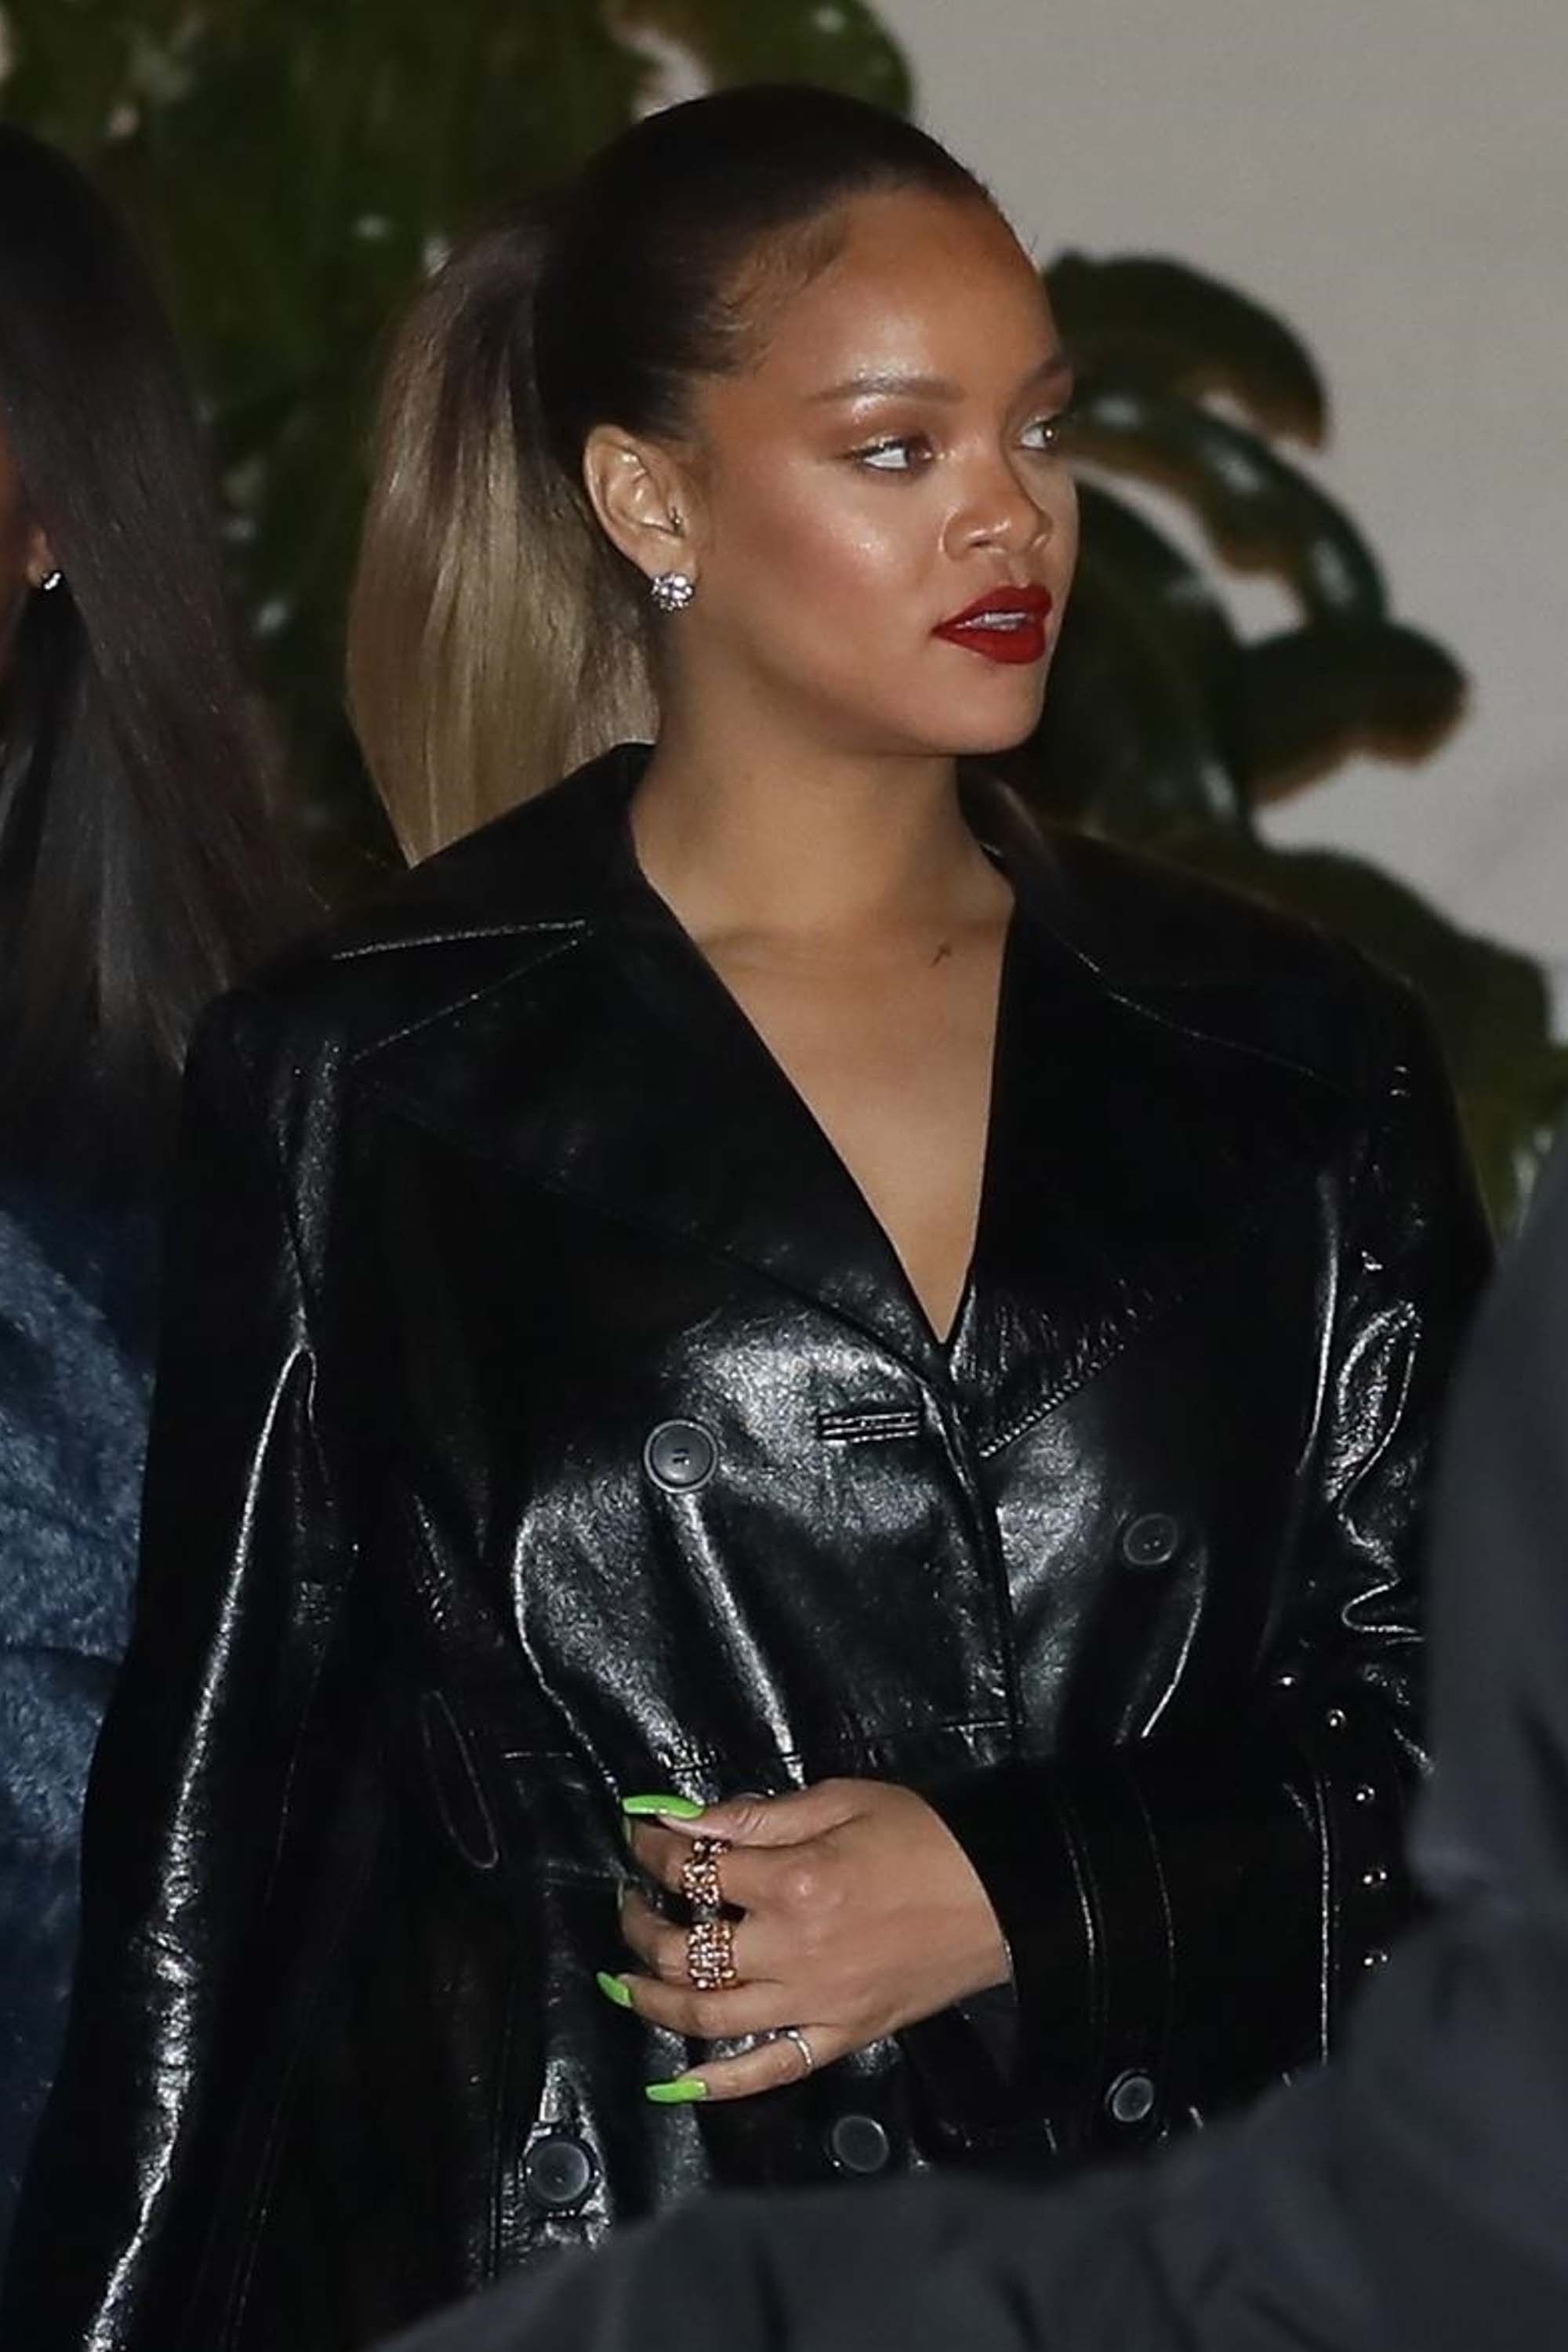 Rihanna attends Jay-Z’s concert